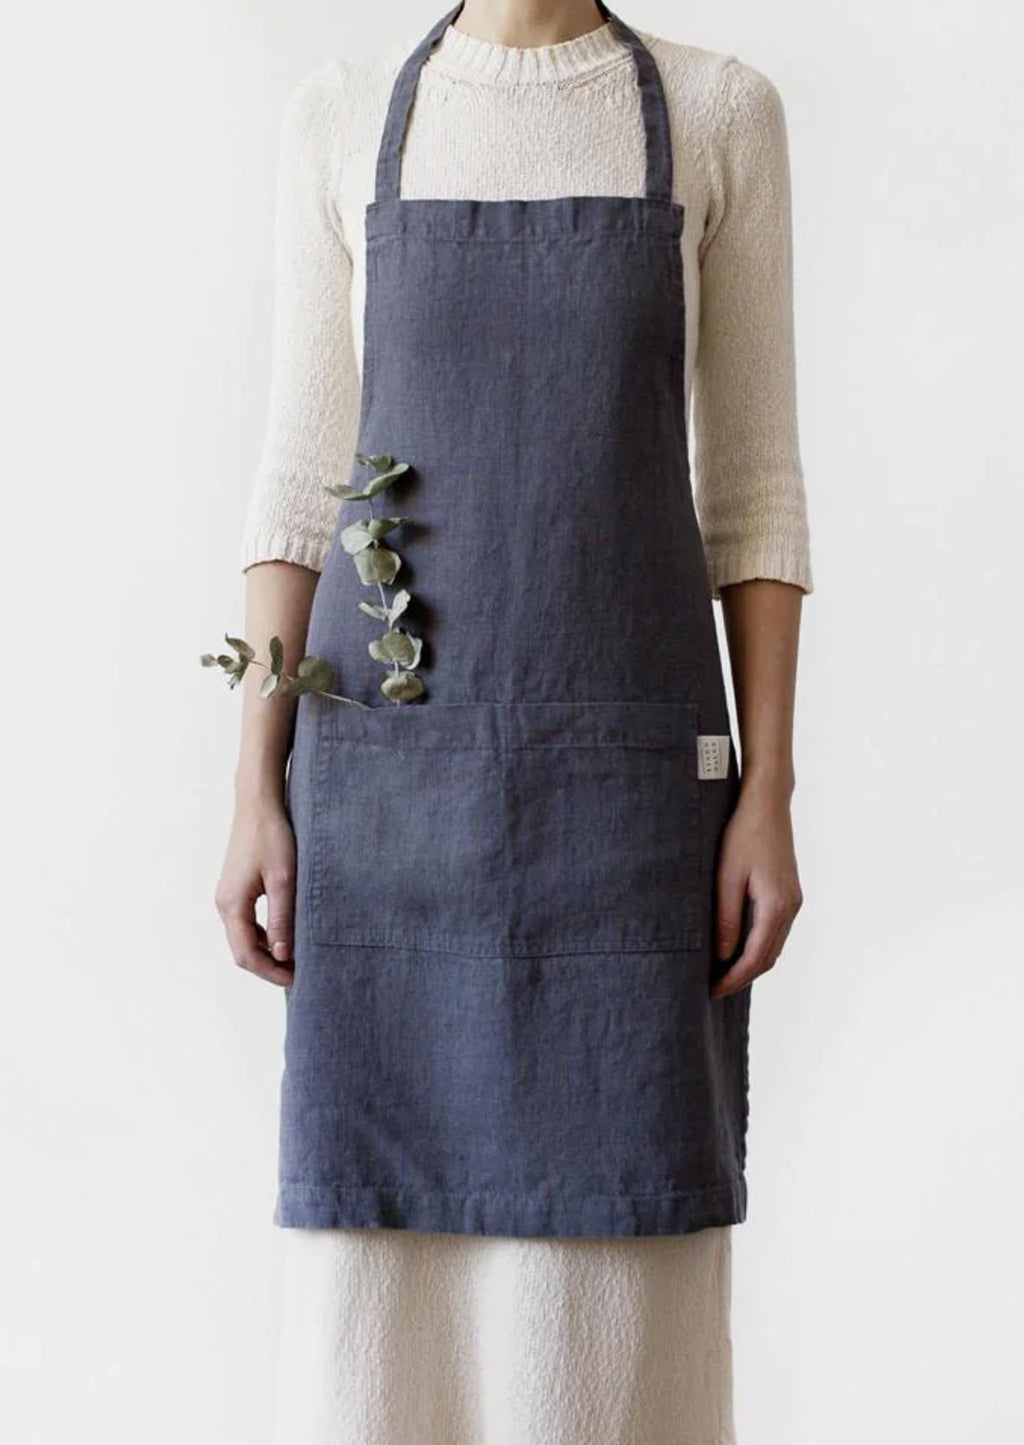 Cinder: A women wearing a linen apron in dark grey color.